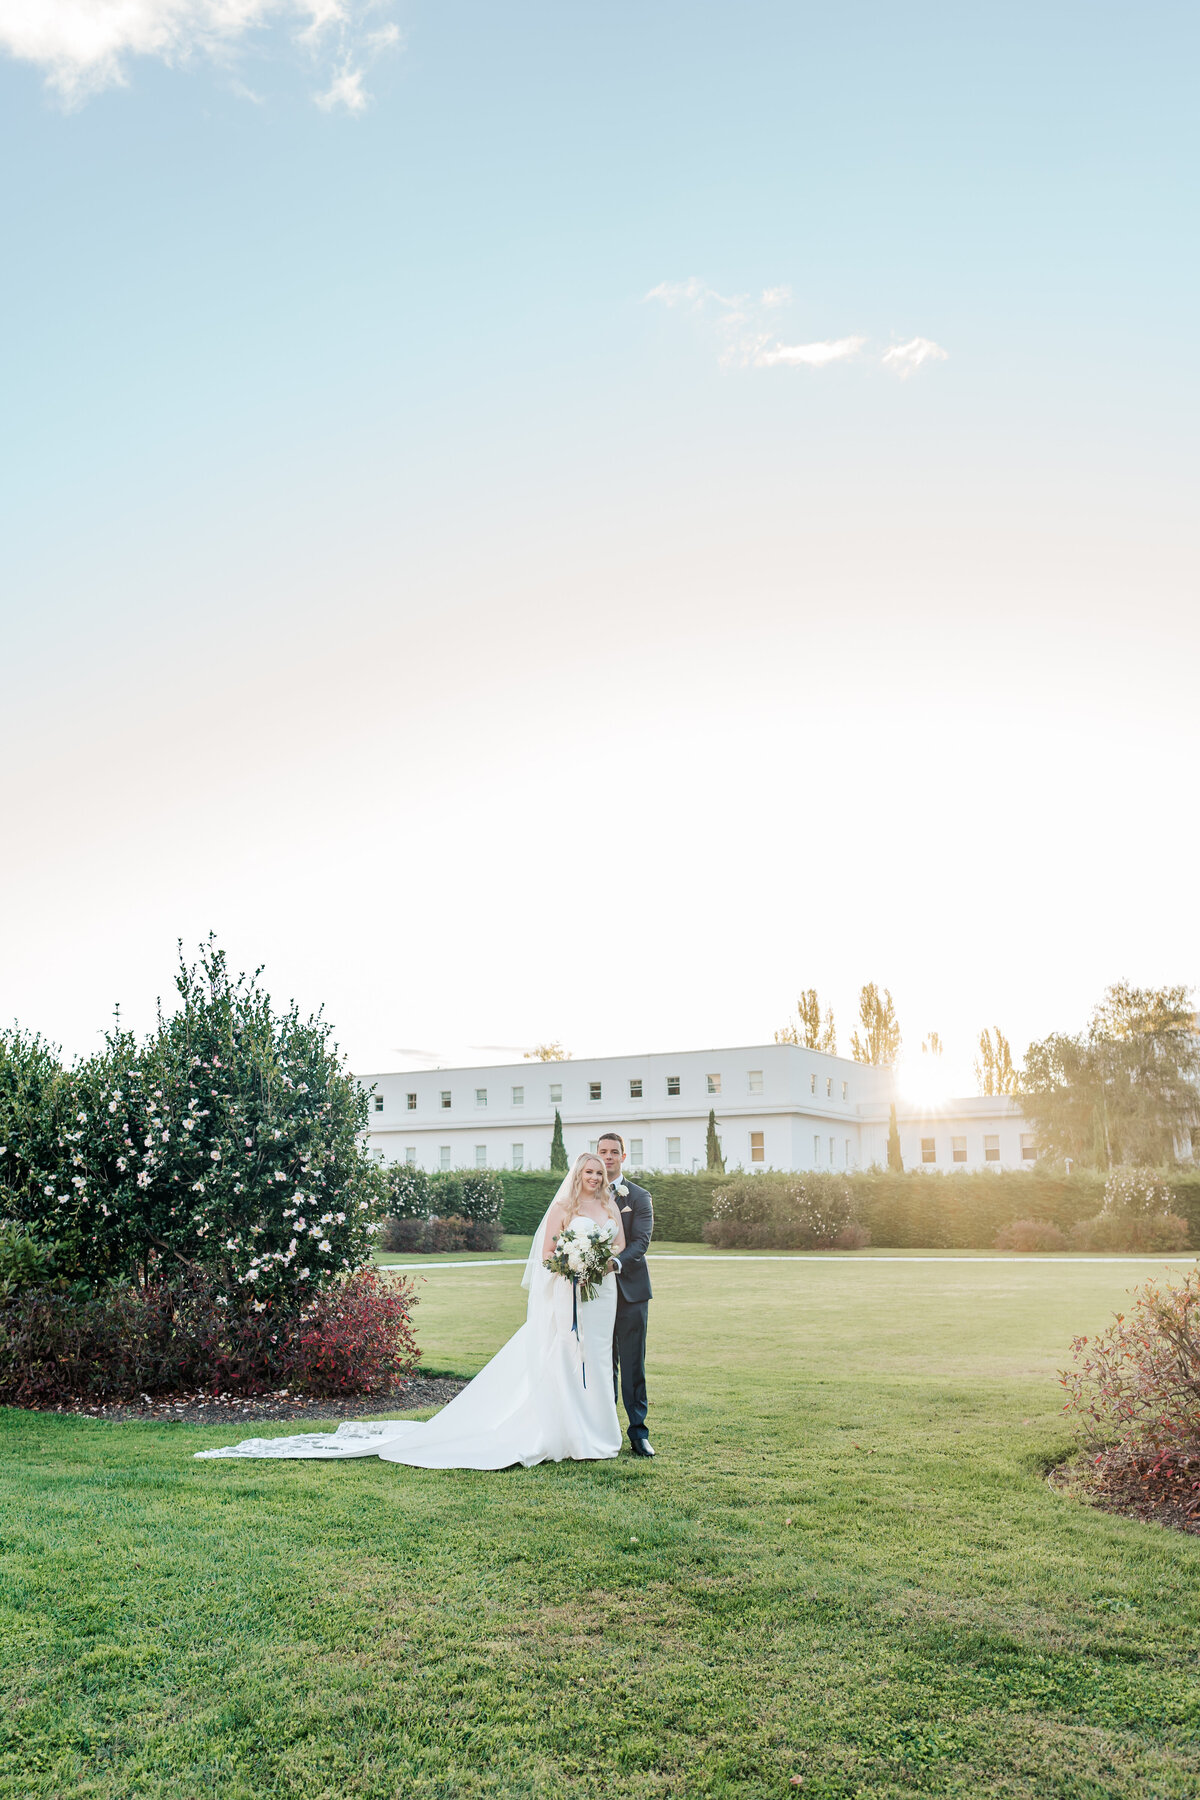 Canberra wedding photography inspiration